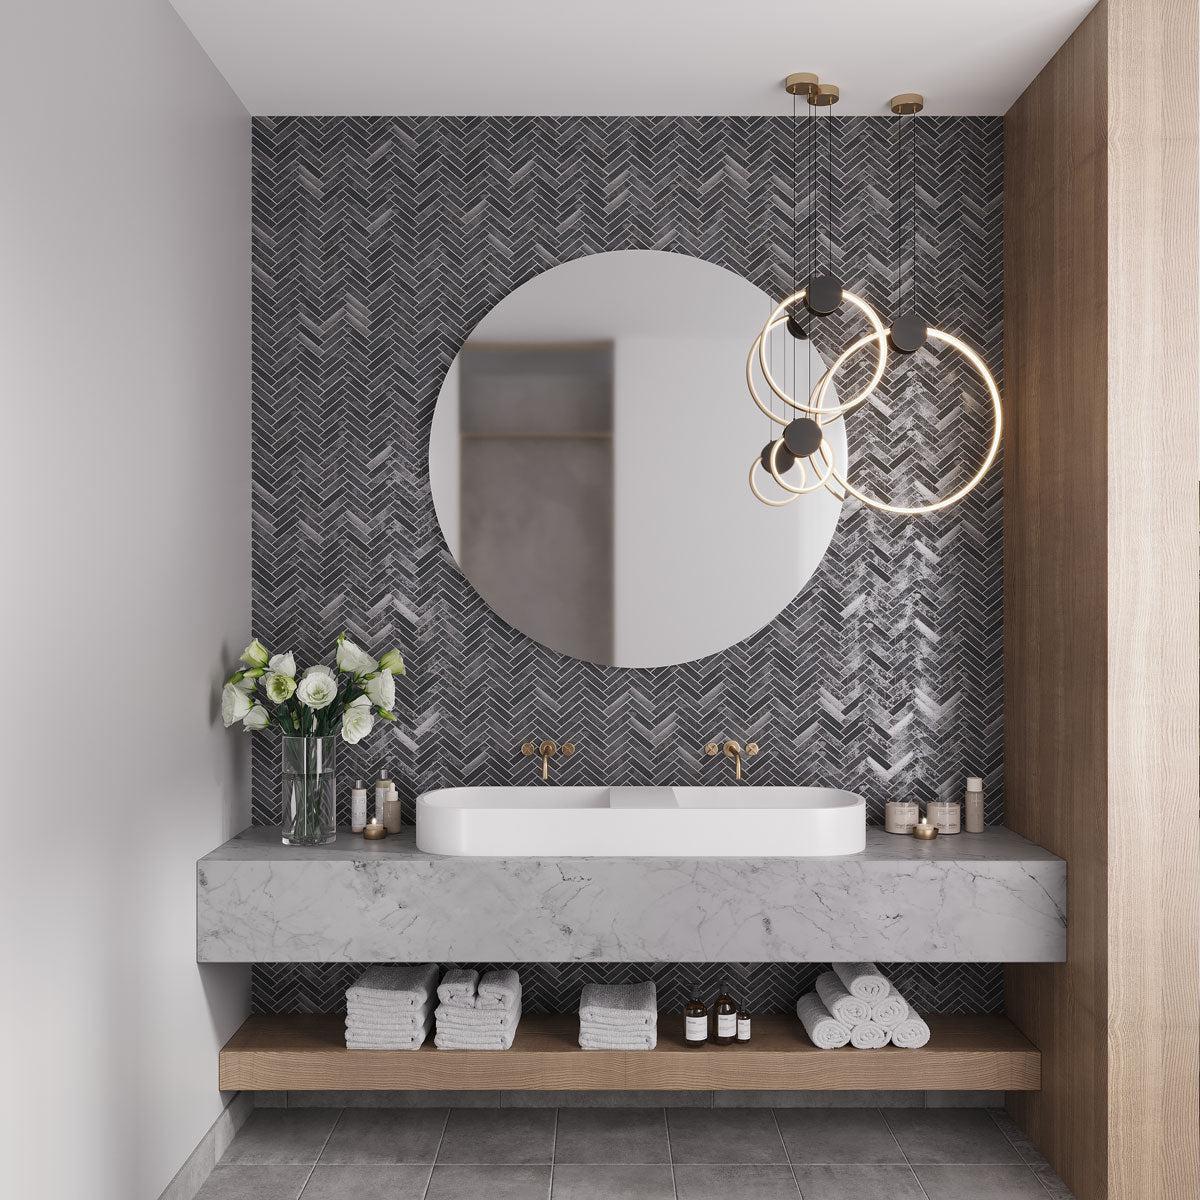 Modern steel and marble bathroom with herringbone backsplash tile